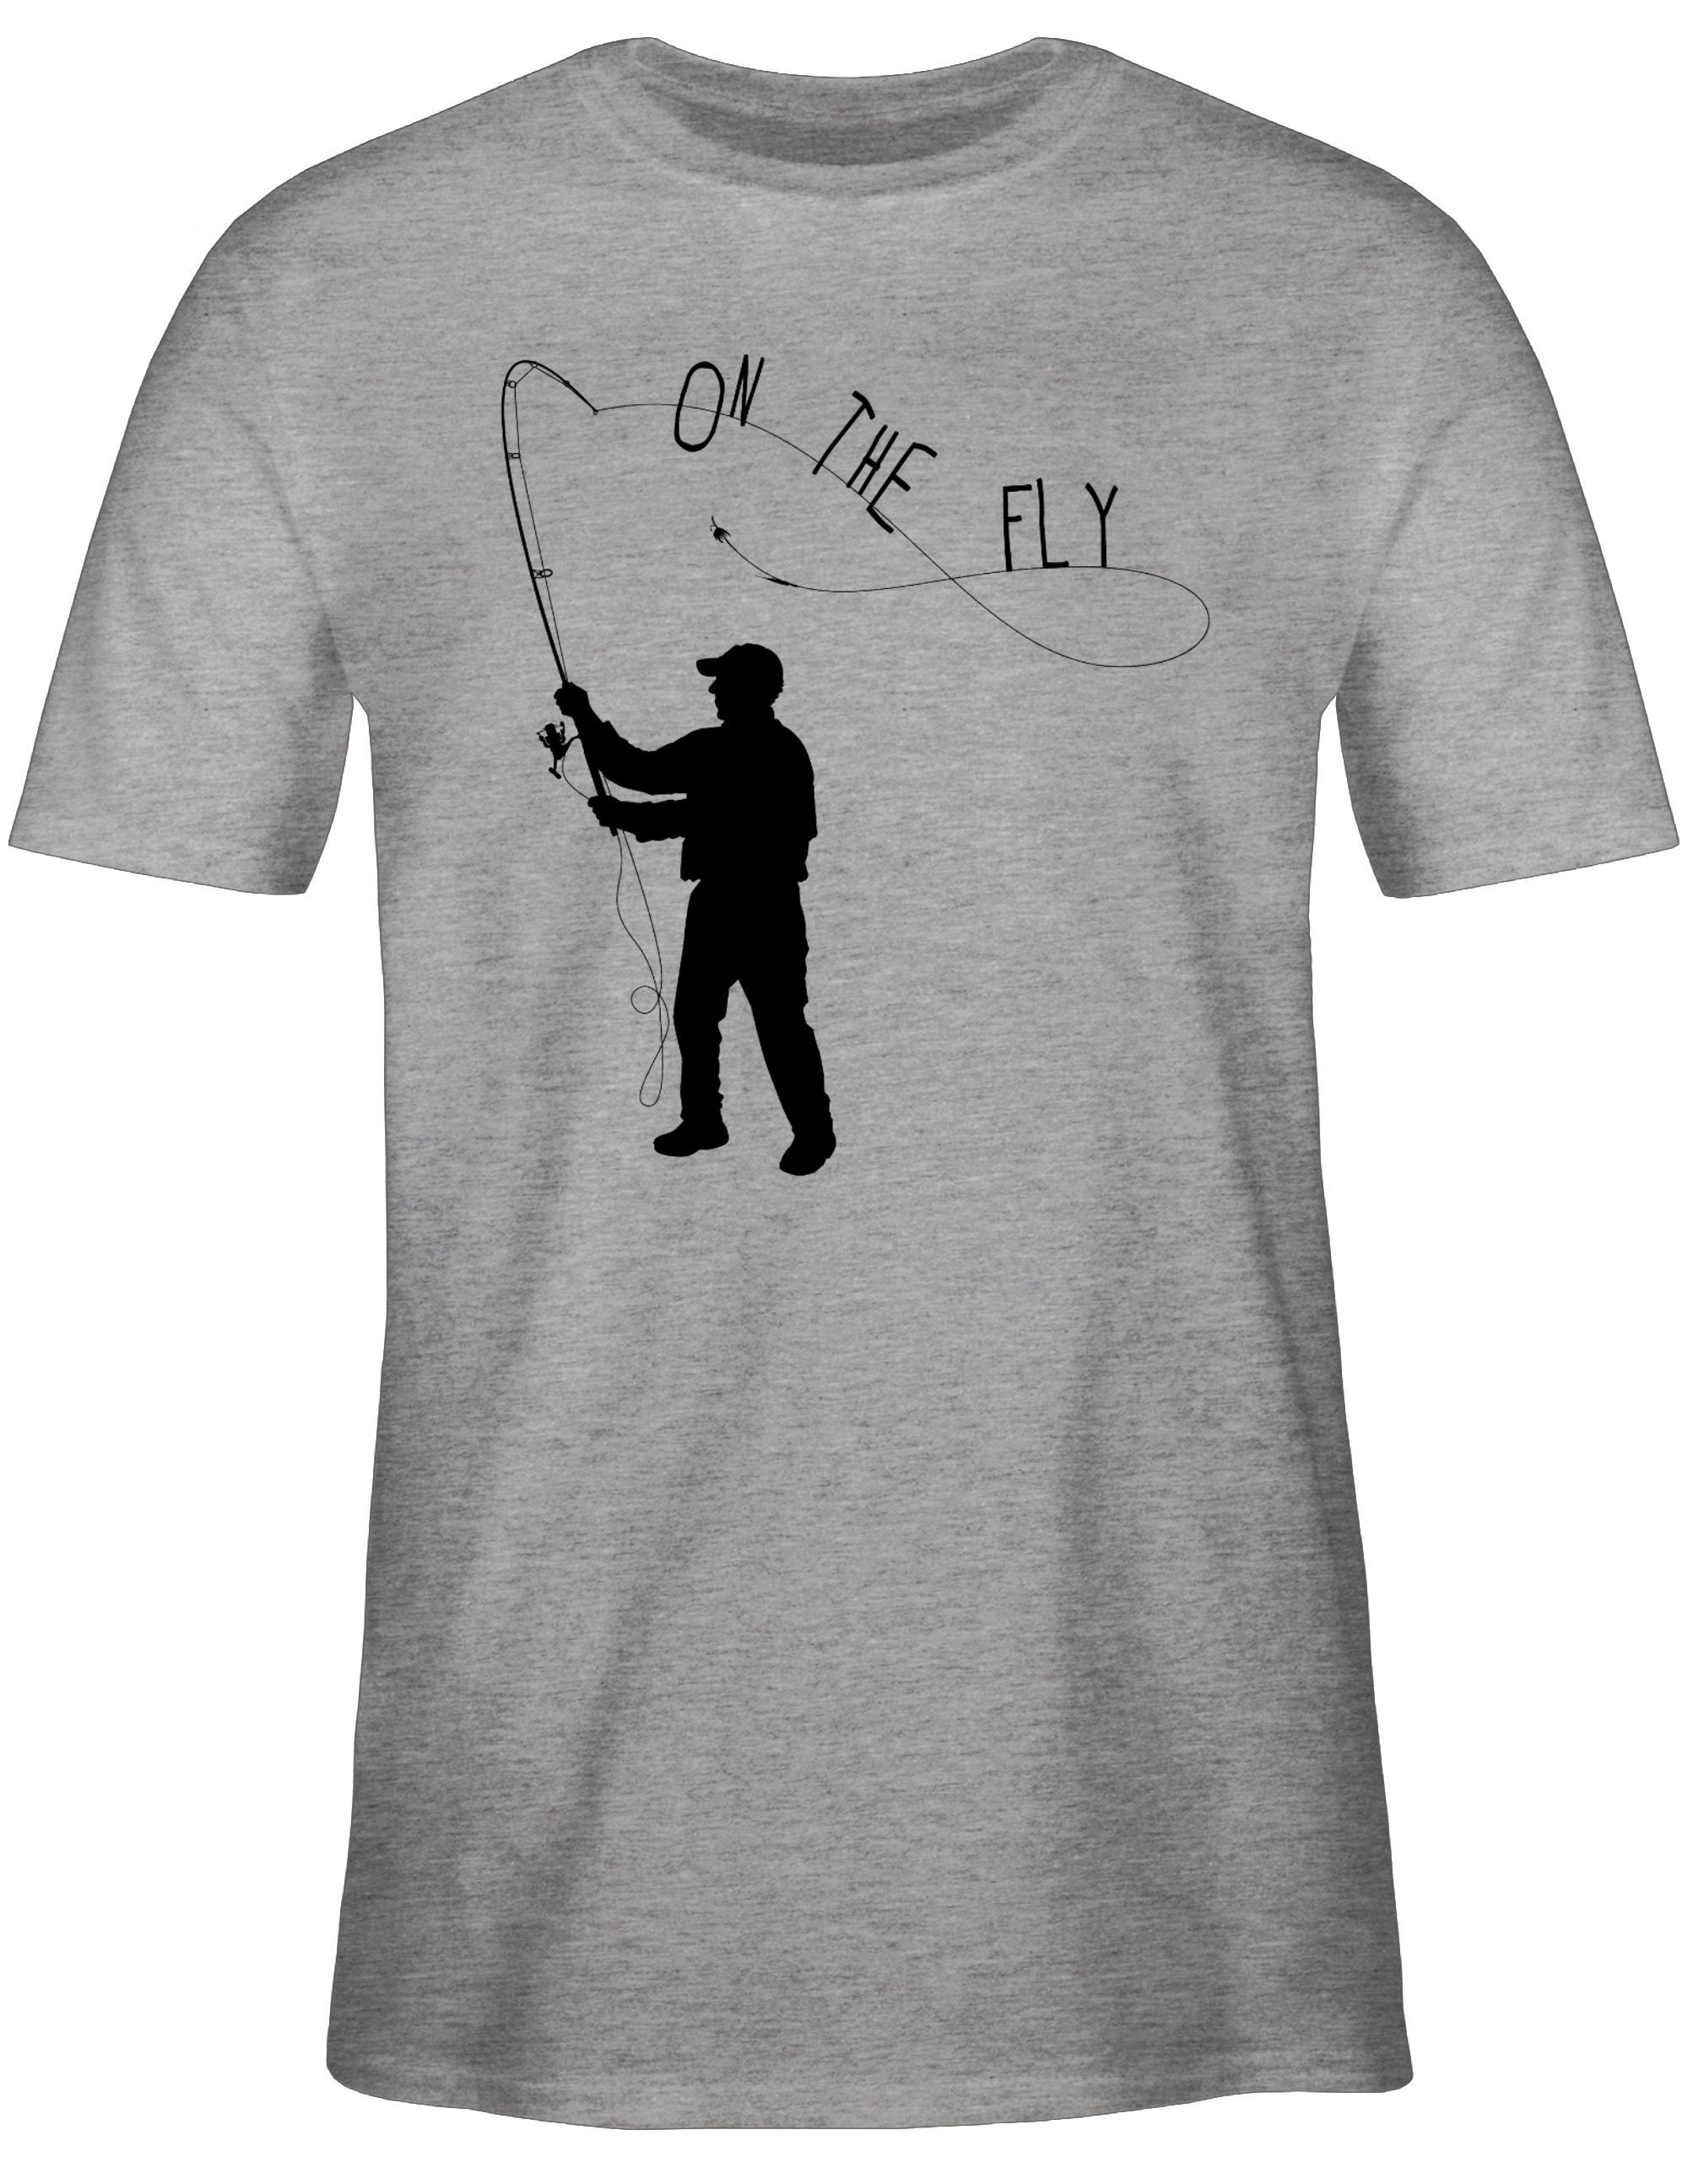 Shirtracer T-Shirt Angler Geschenke 3 meliert Grau Fly the - Fishing On